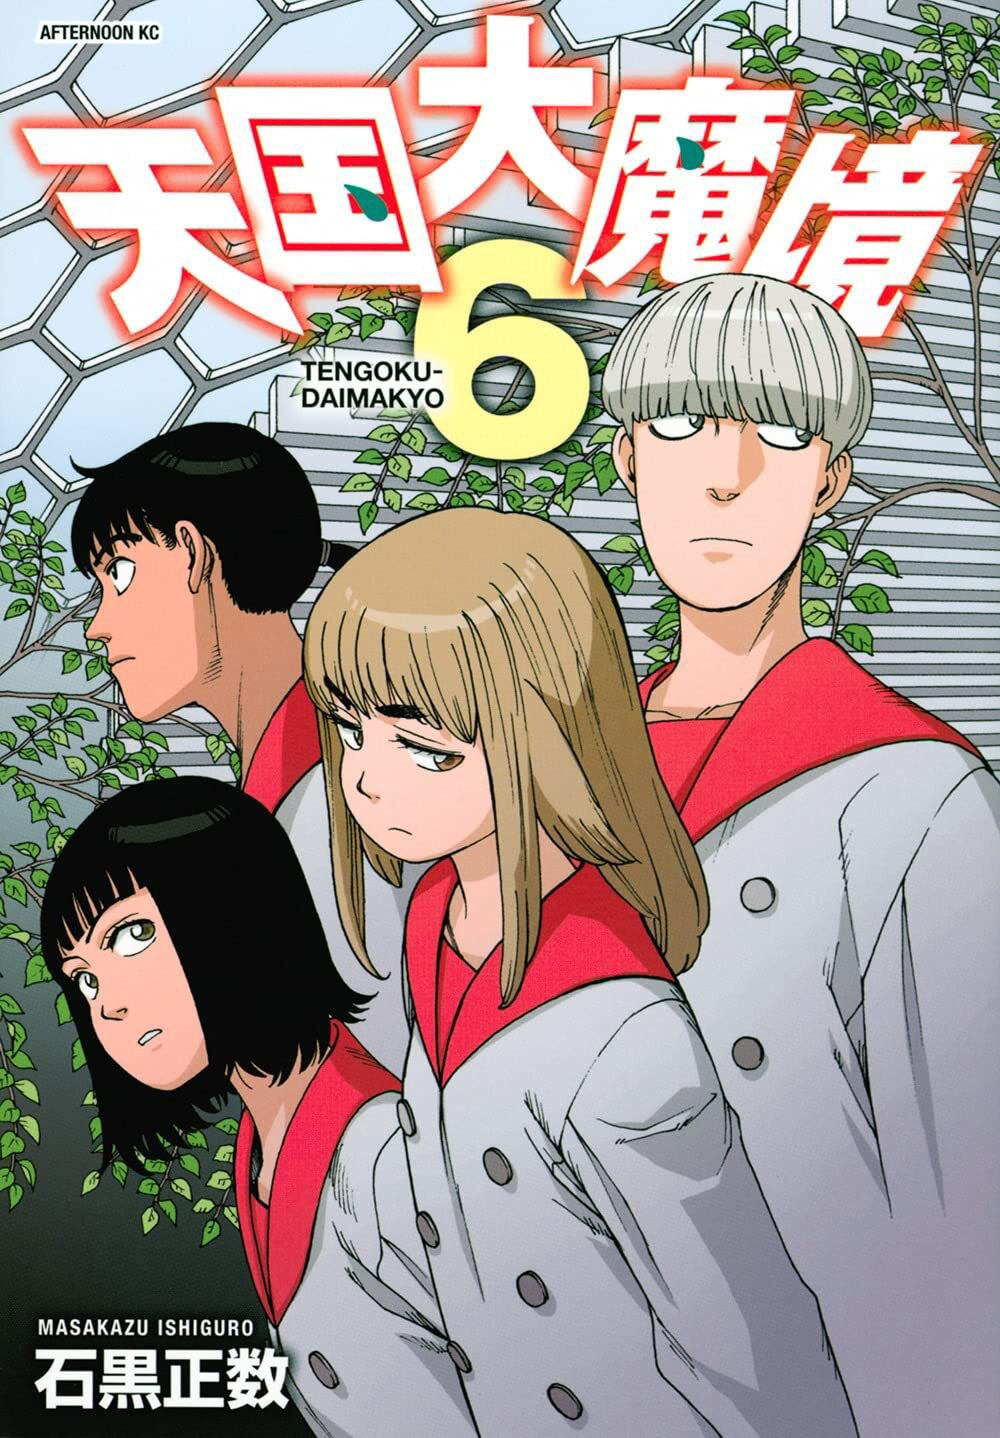 Heavenly Delusion Volume 6 - Manga